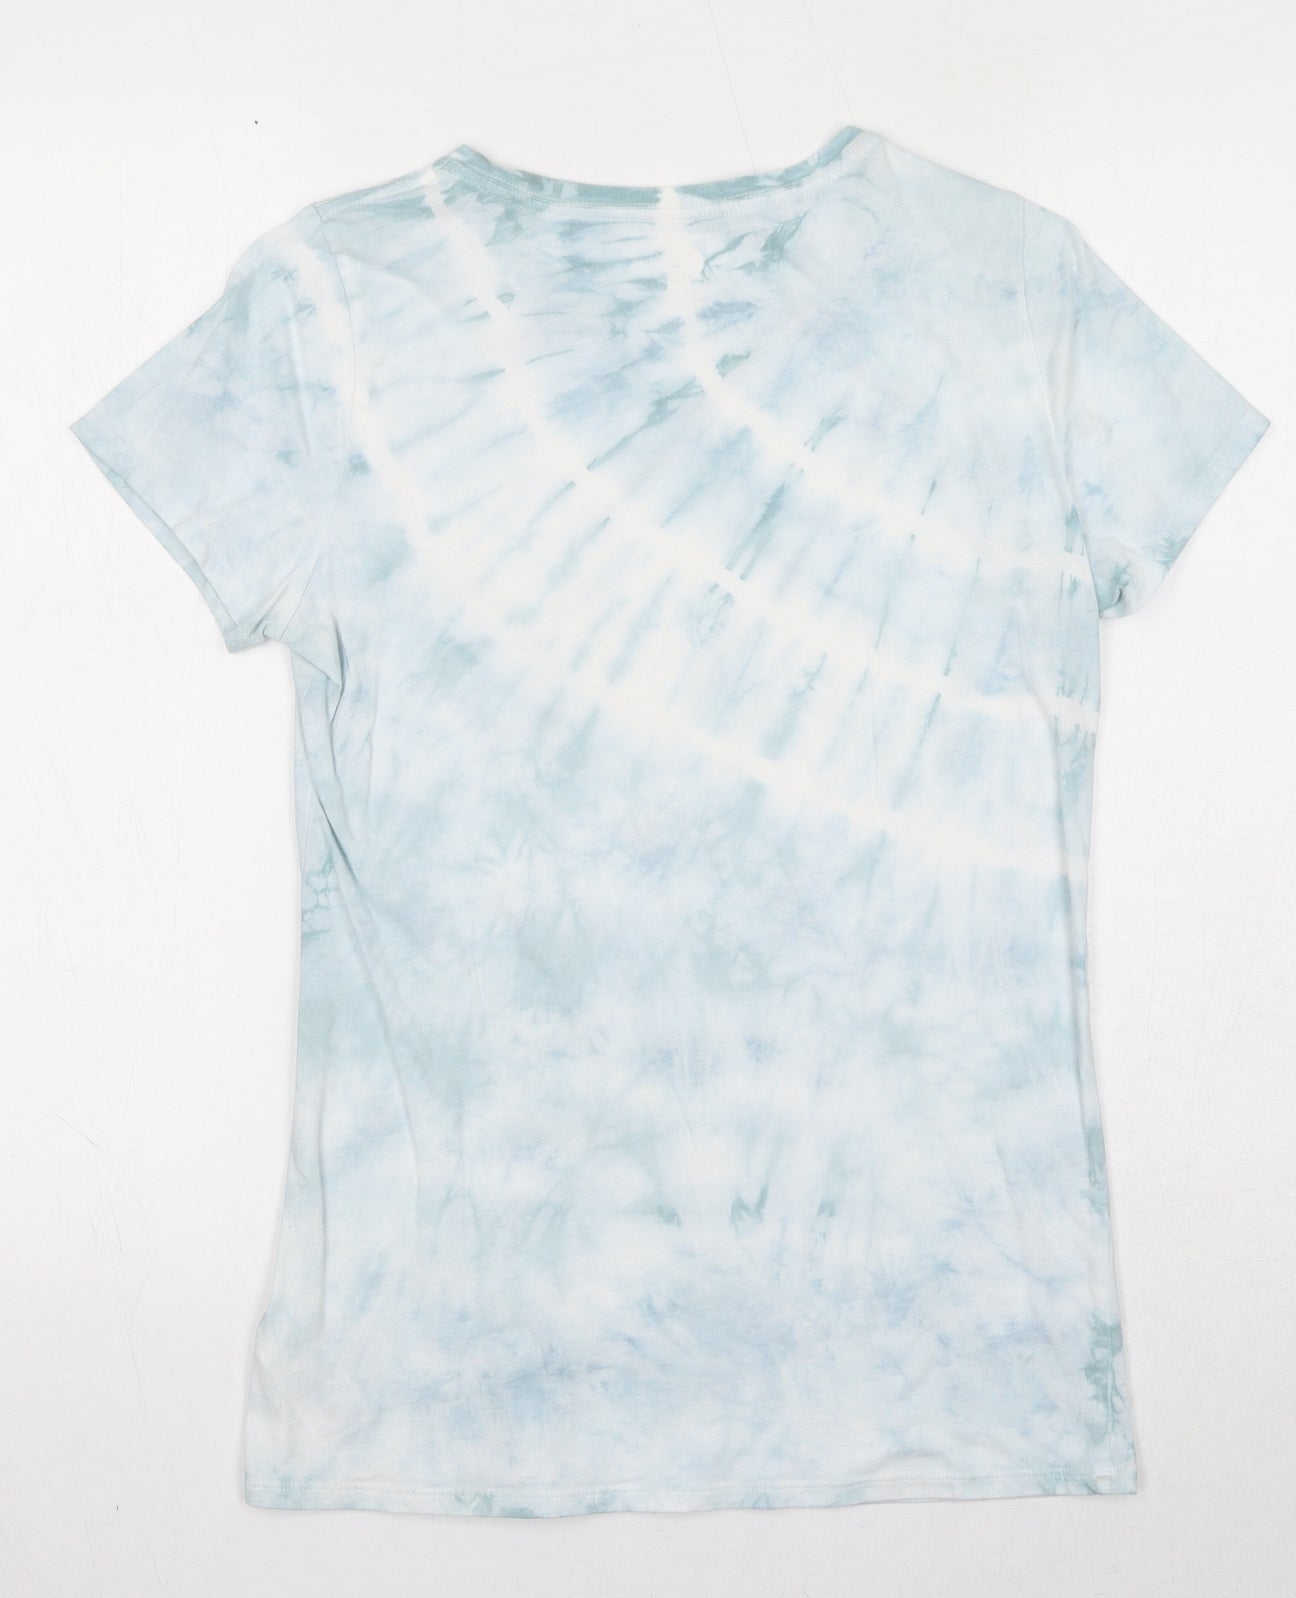 Gap Mens Blue Cotton T-Shirt Size XS Crew Neck - Tie Dye